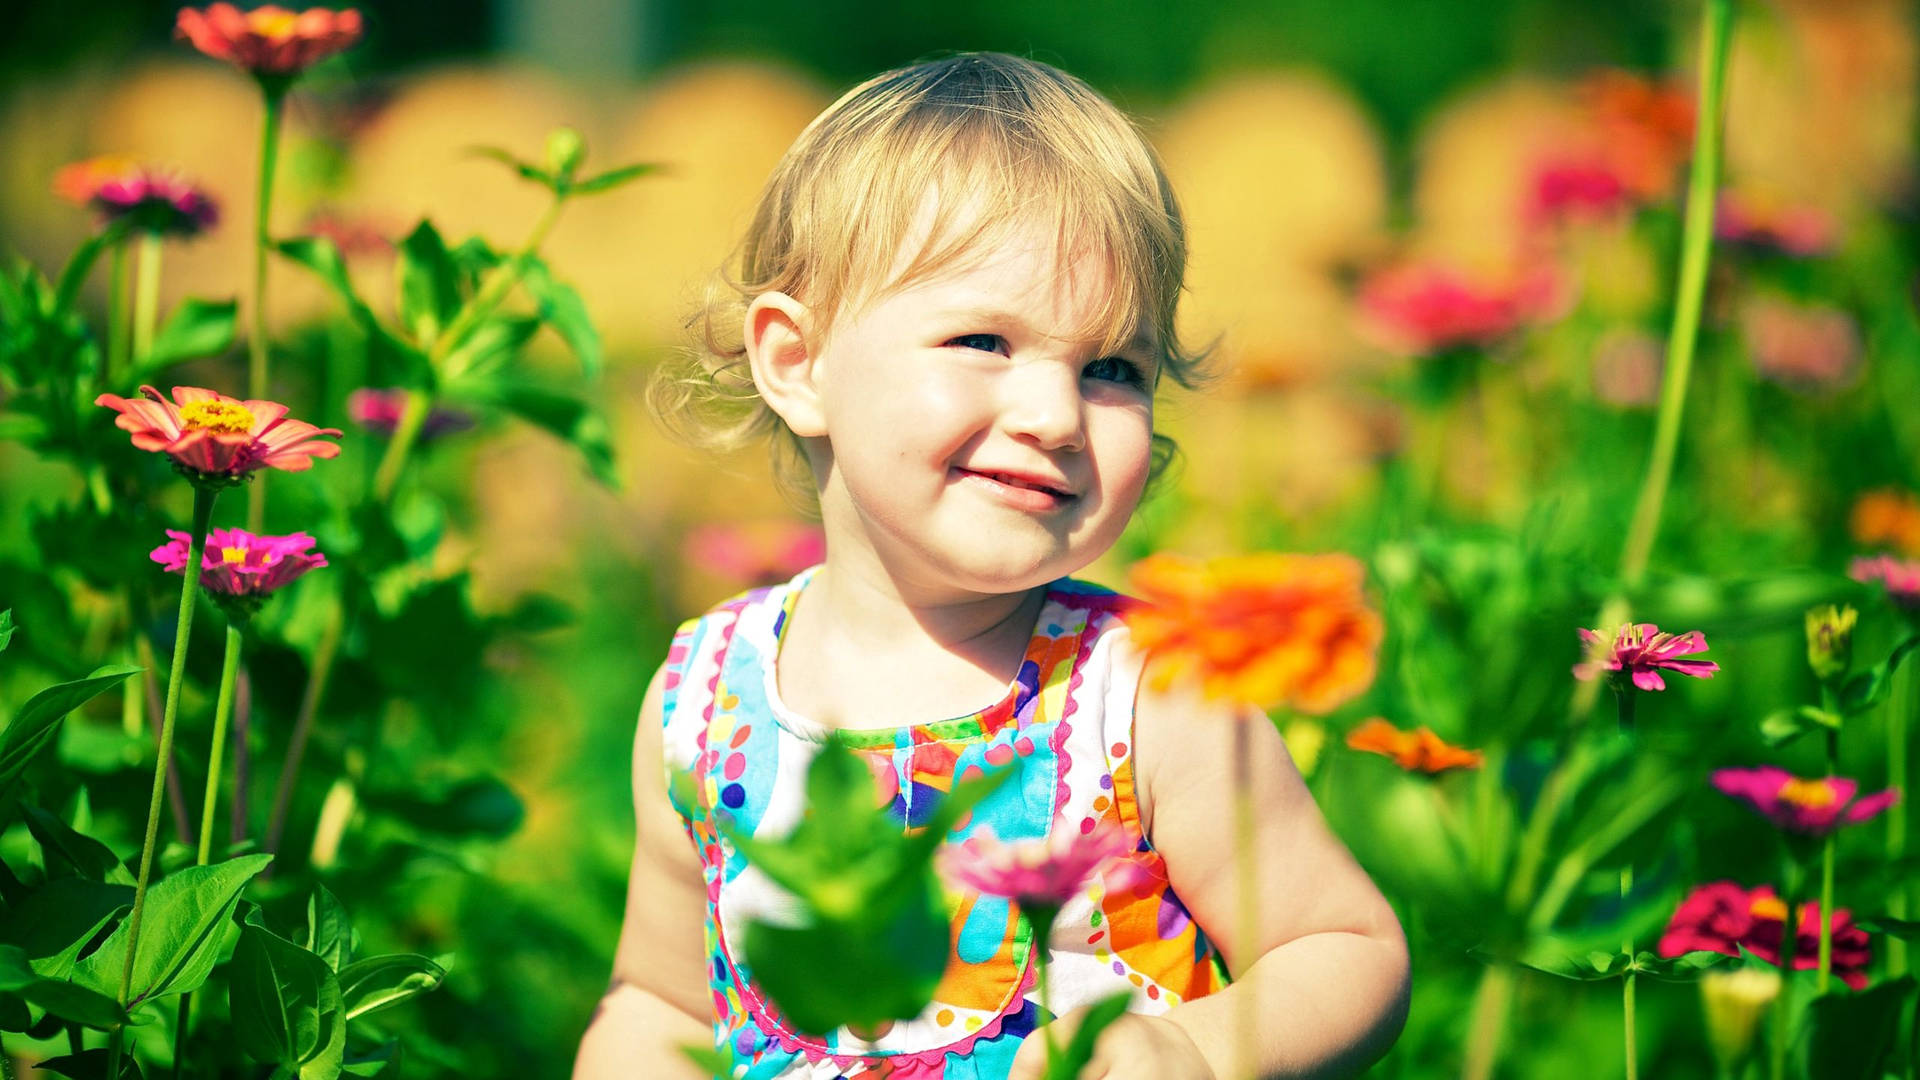 Smiling Child In A Flower Garden Wallpaper